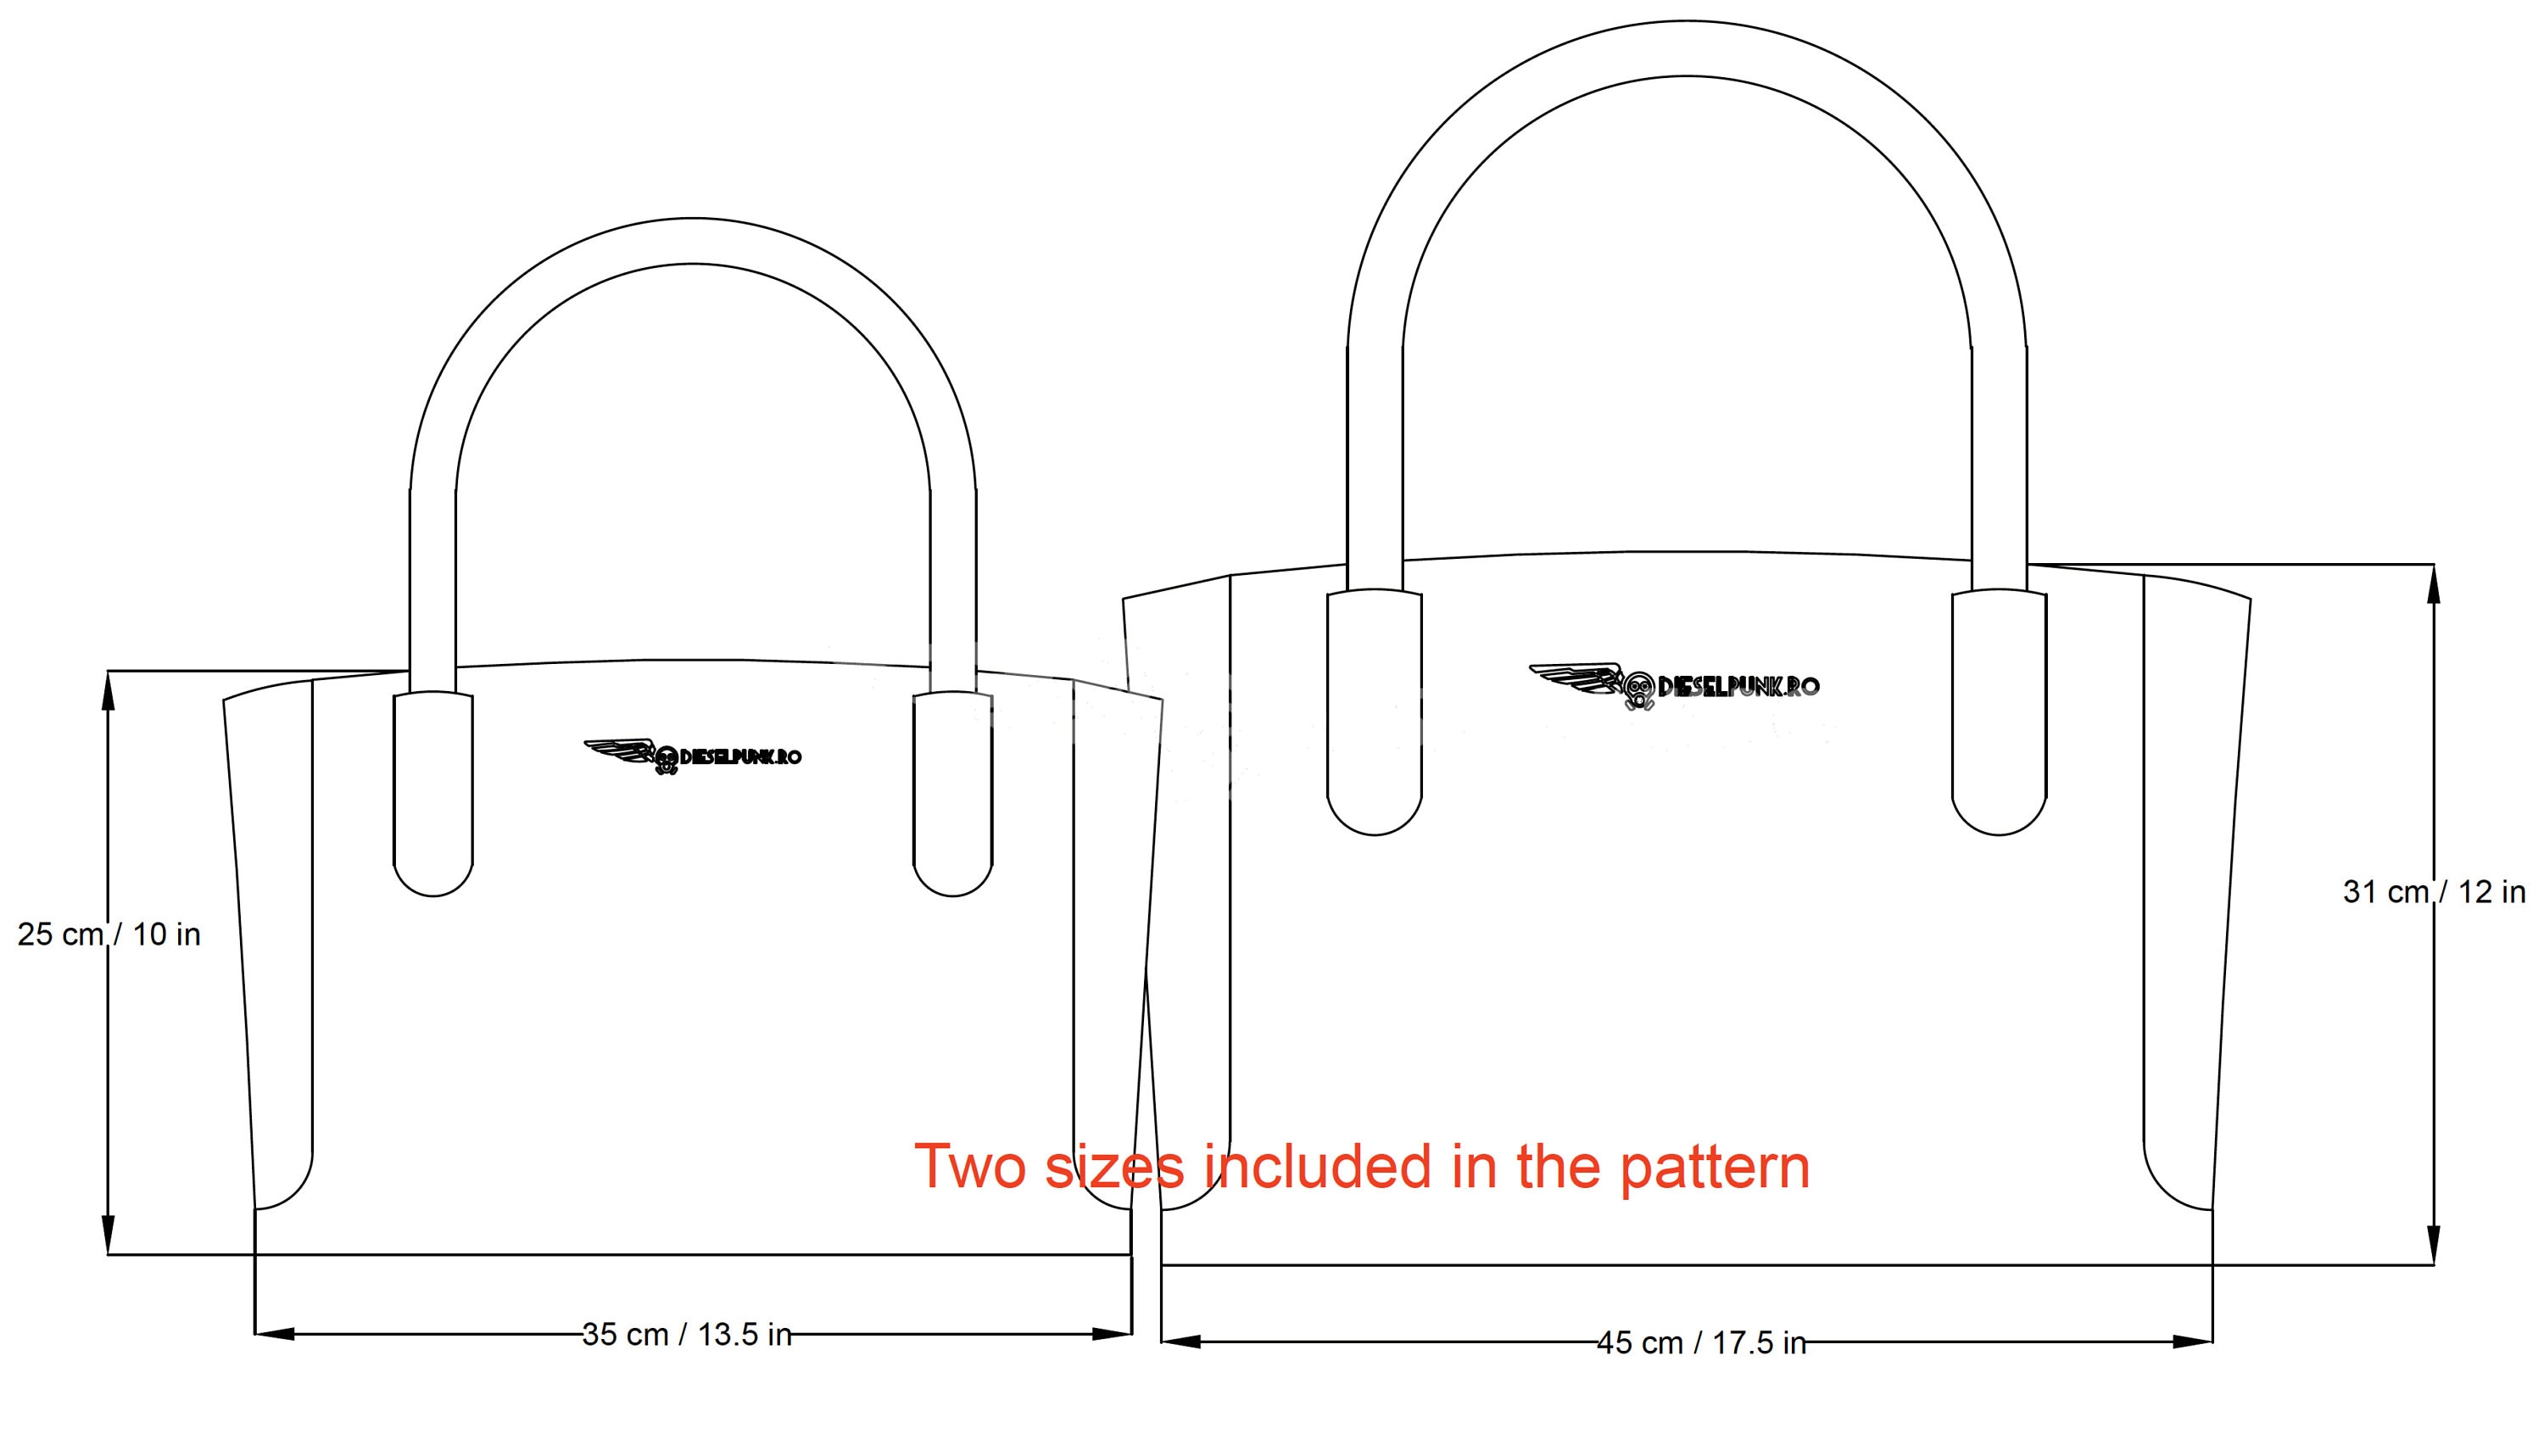 Tote Bag Pattern - Leather DIY - Pdf Download - Leather Bag Pattern - Tote Bag Pattern ...